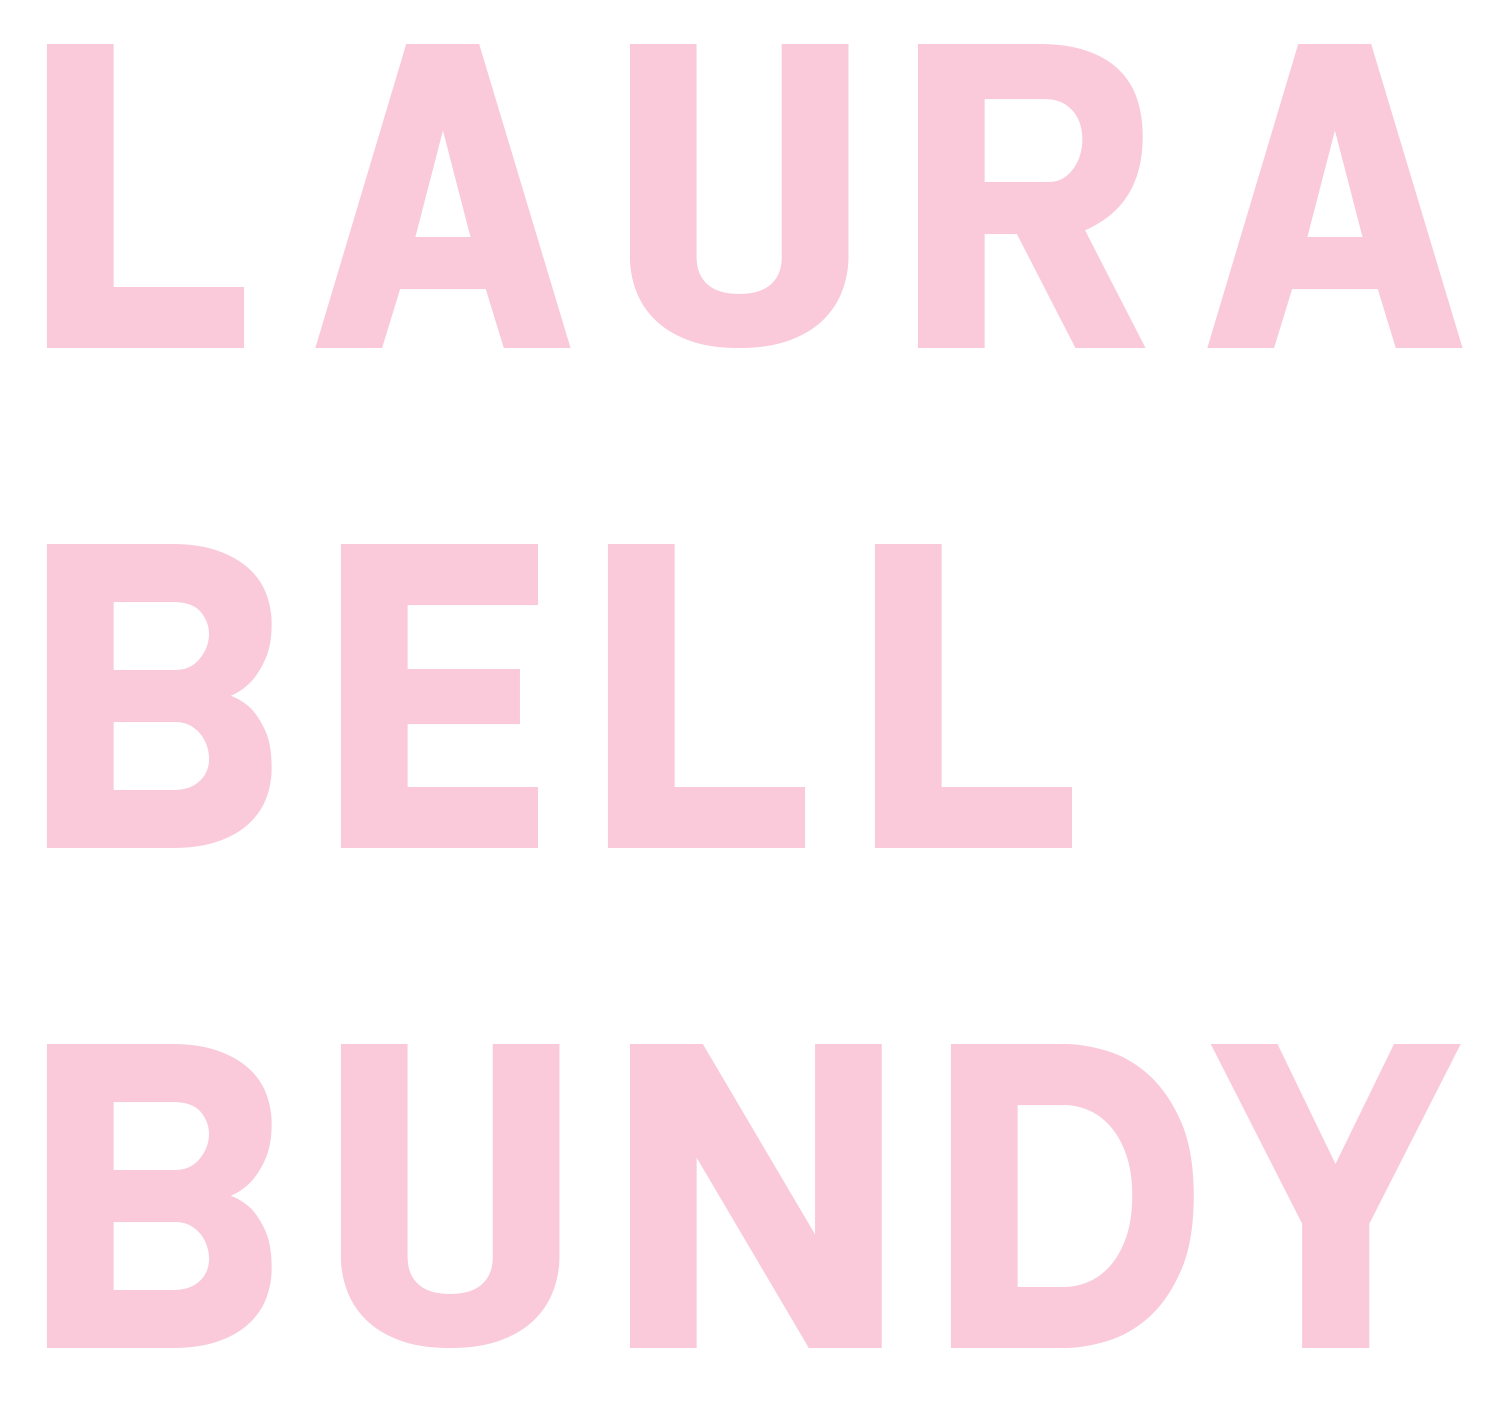 Laura Bell Bundy